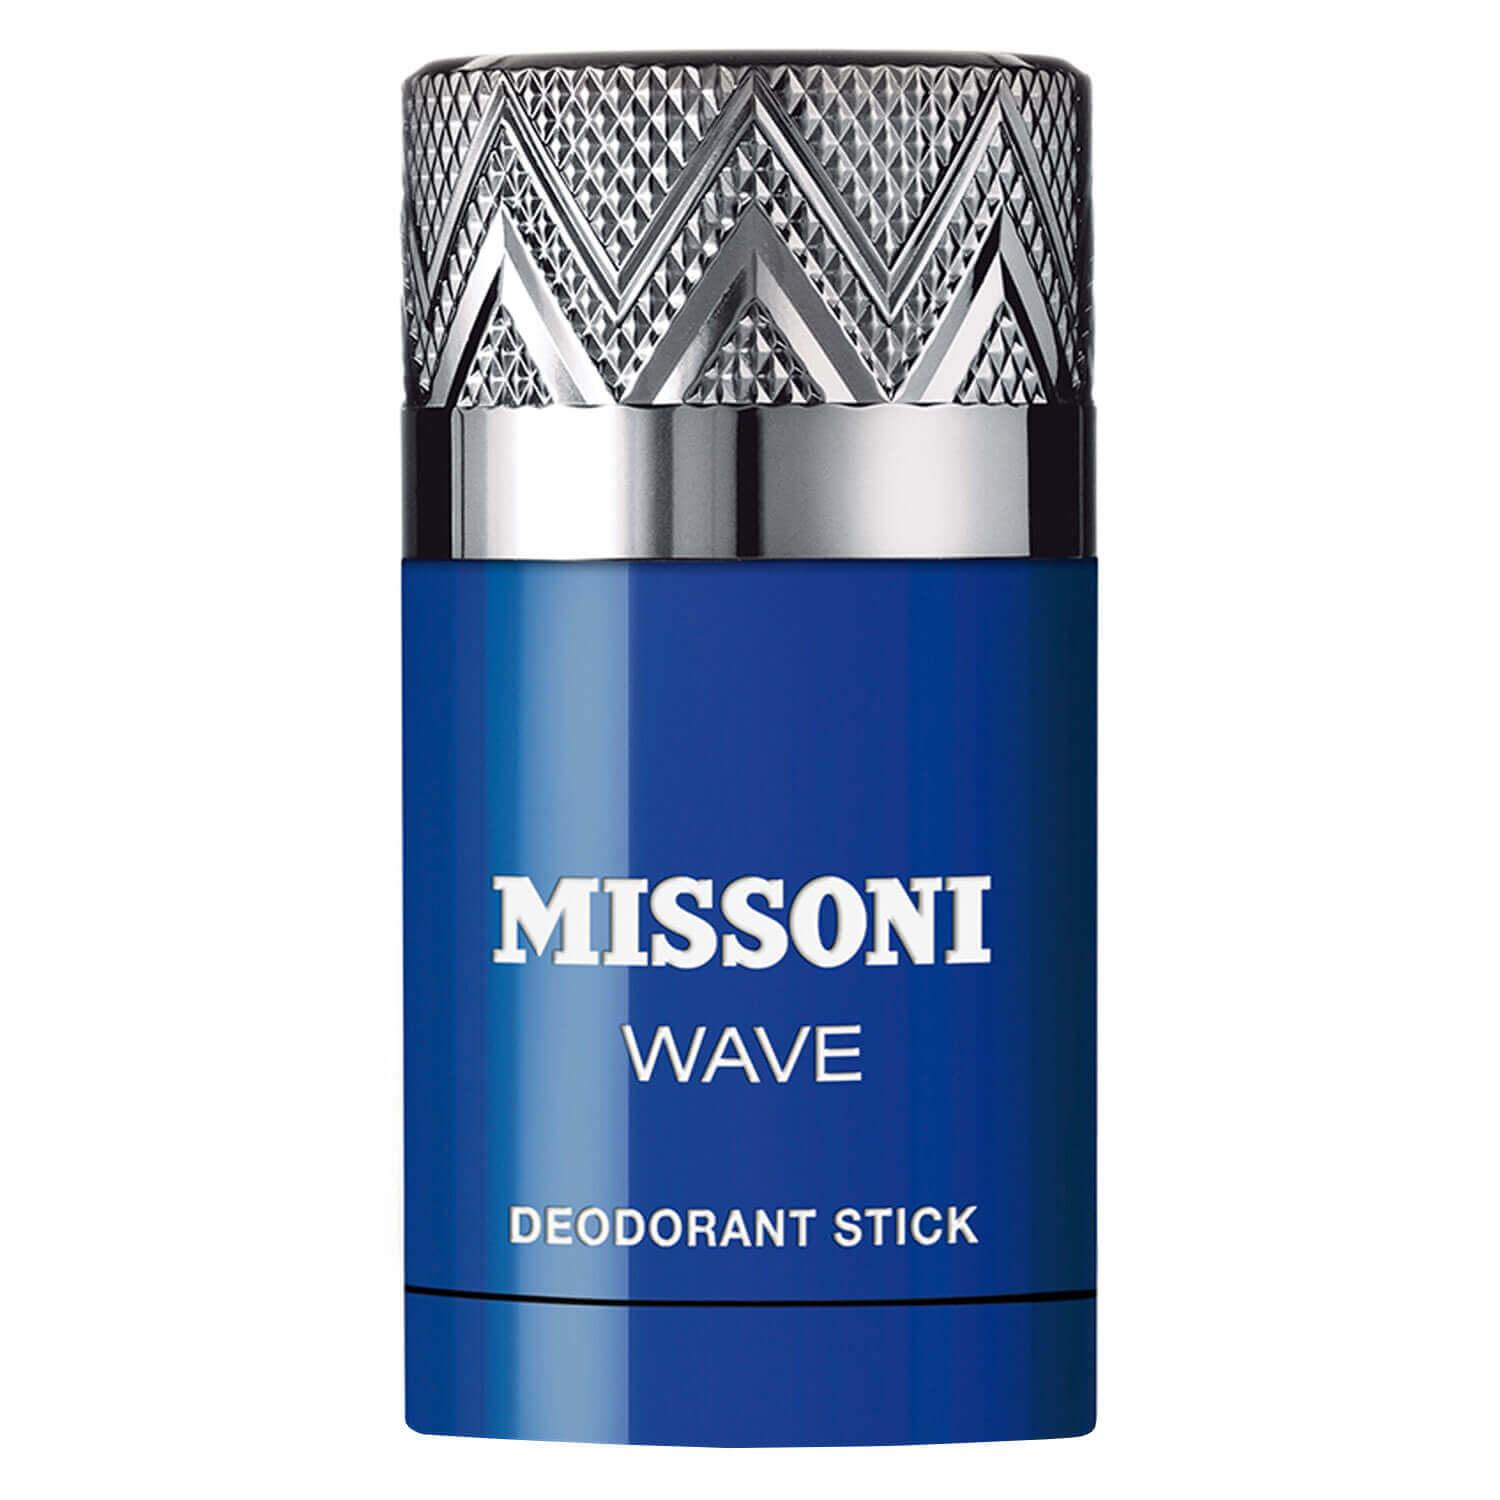 Missoni Wave - Deodorant Stick